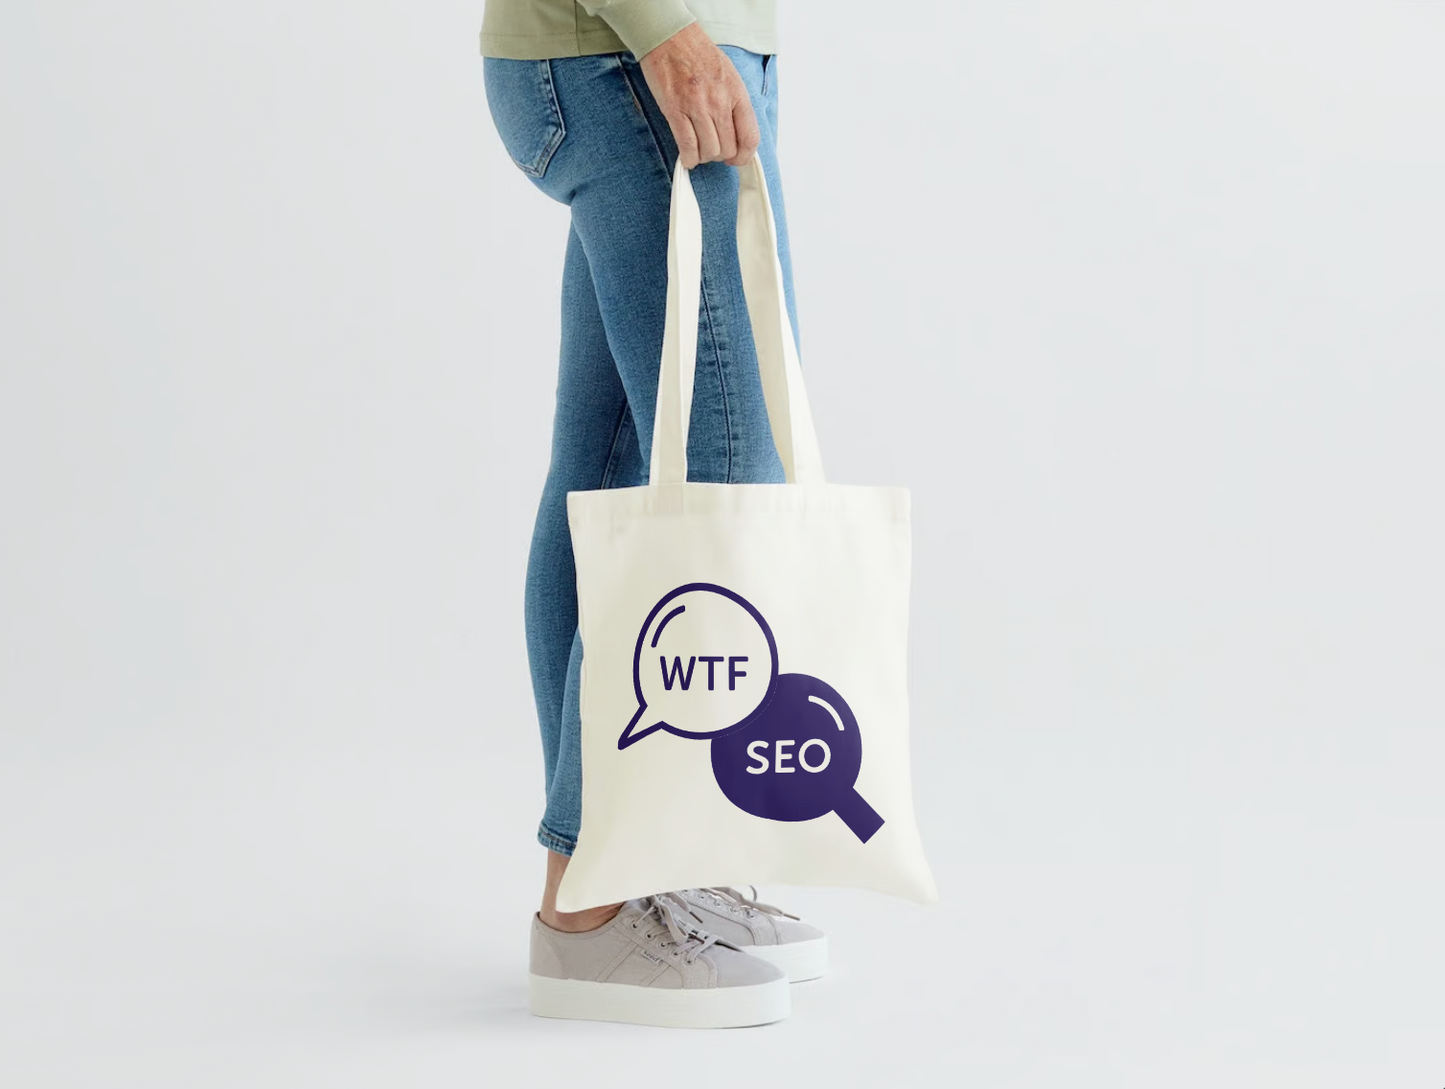 WTF is SEO? tote bag